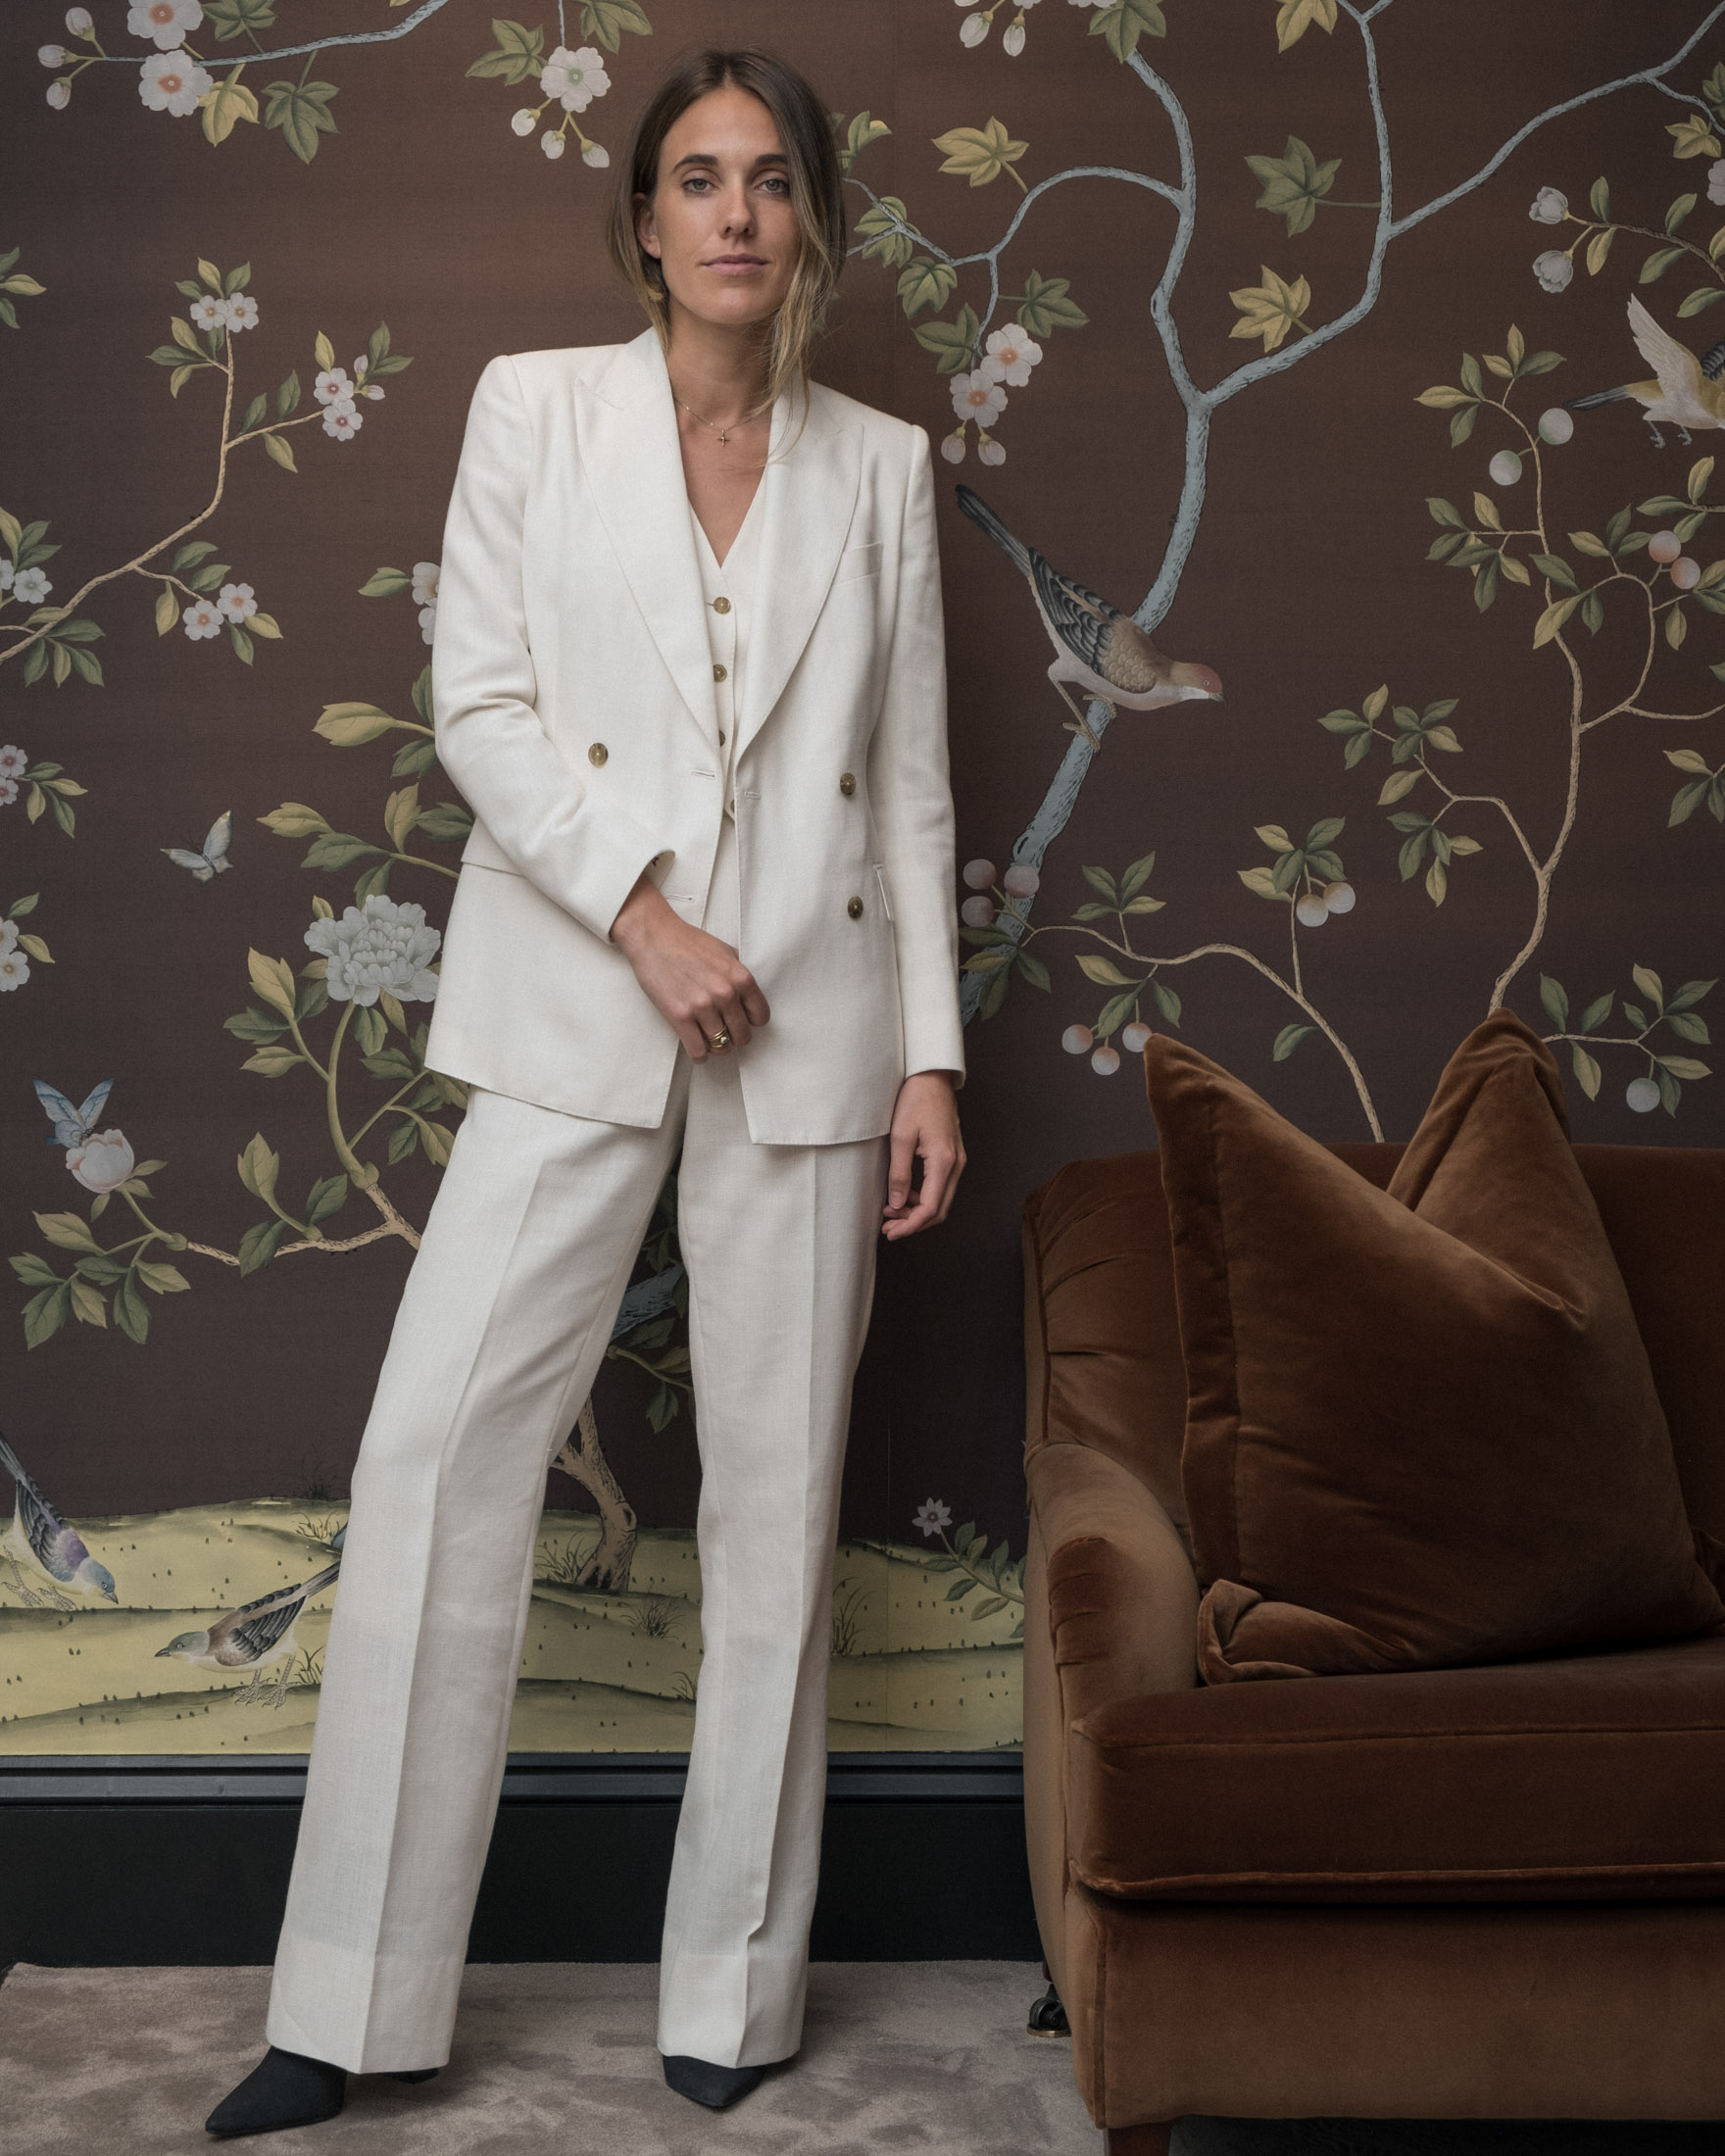 Bespoke Suits Queens - New York bespoke tailors